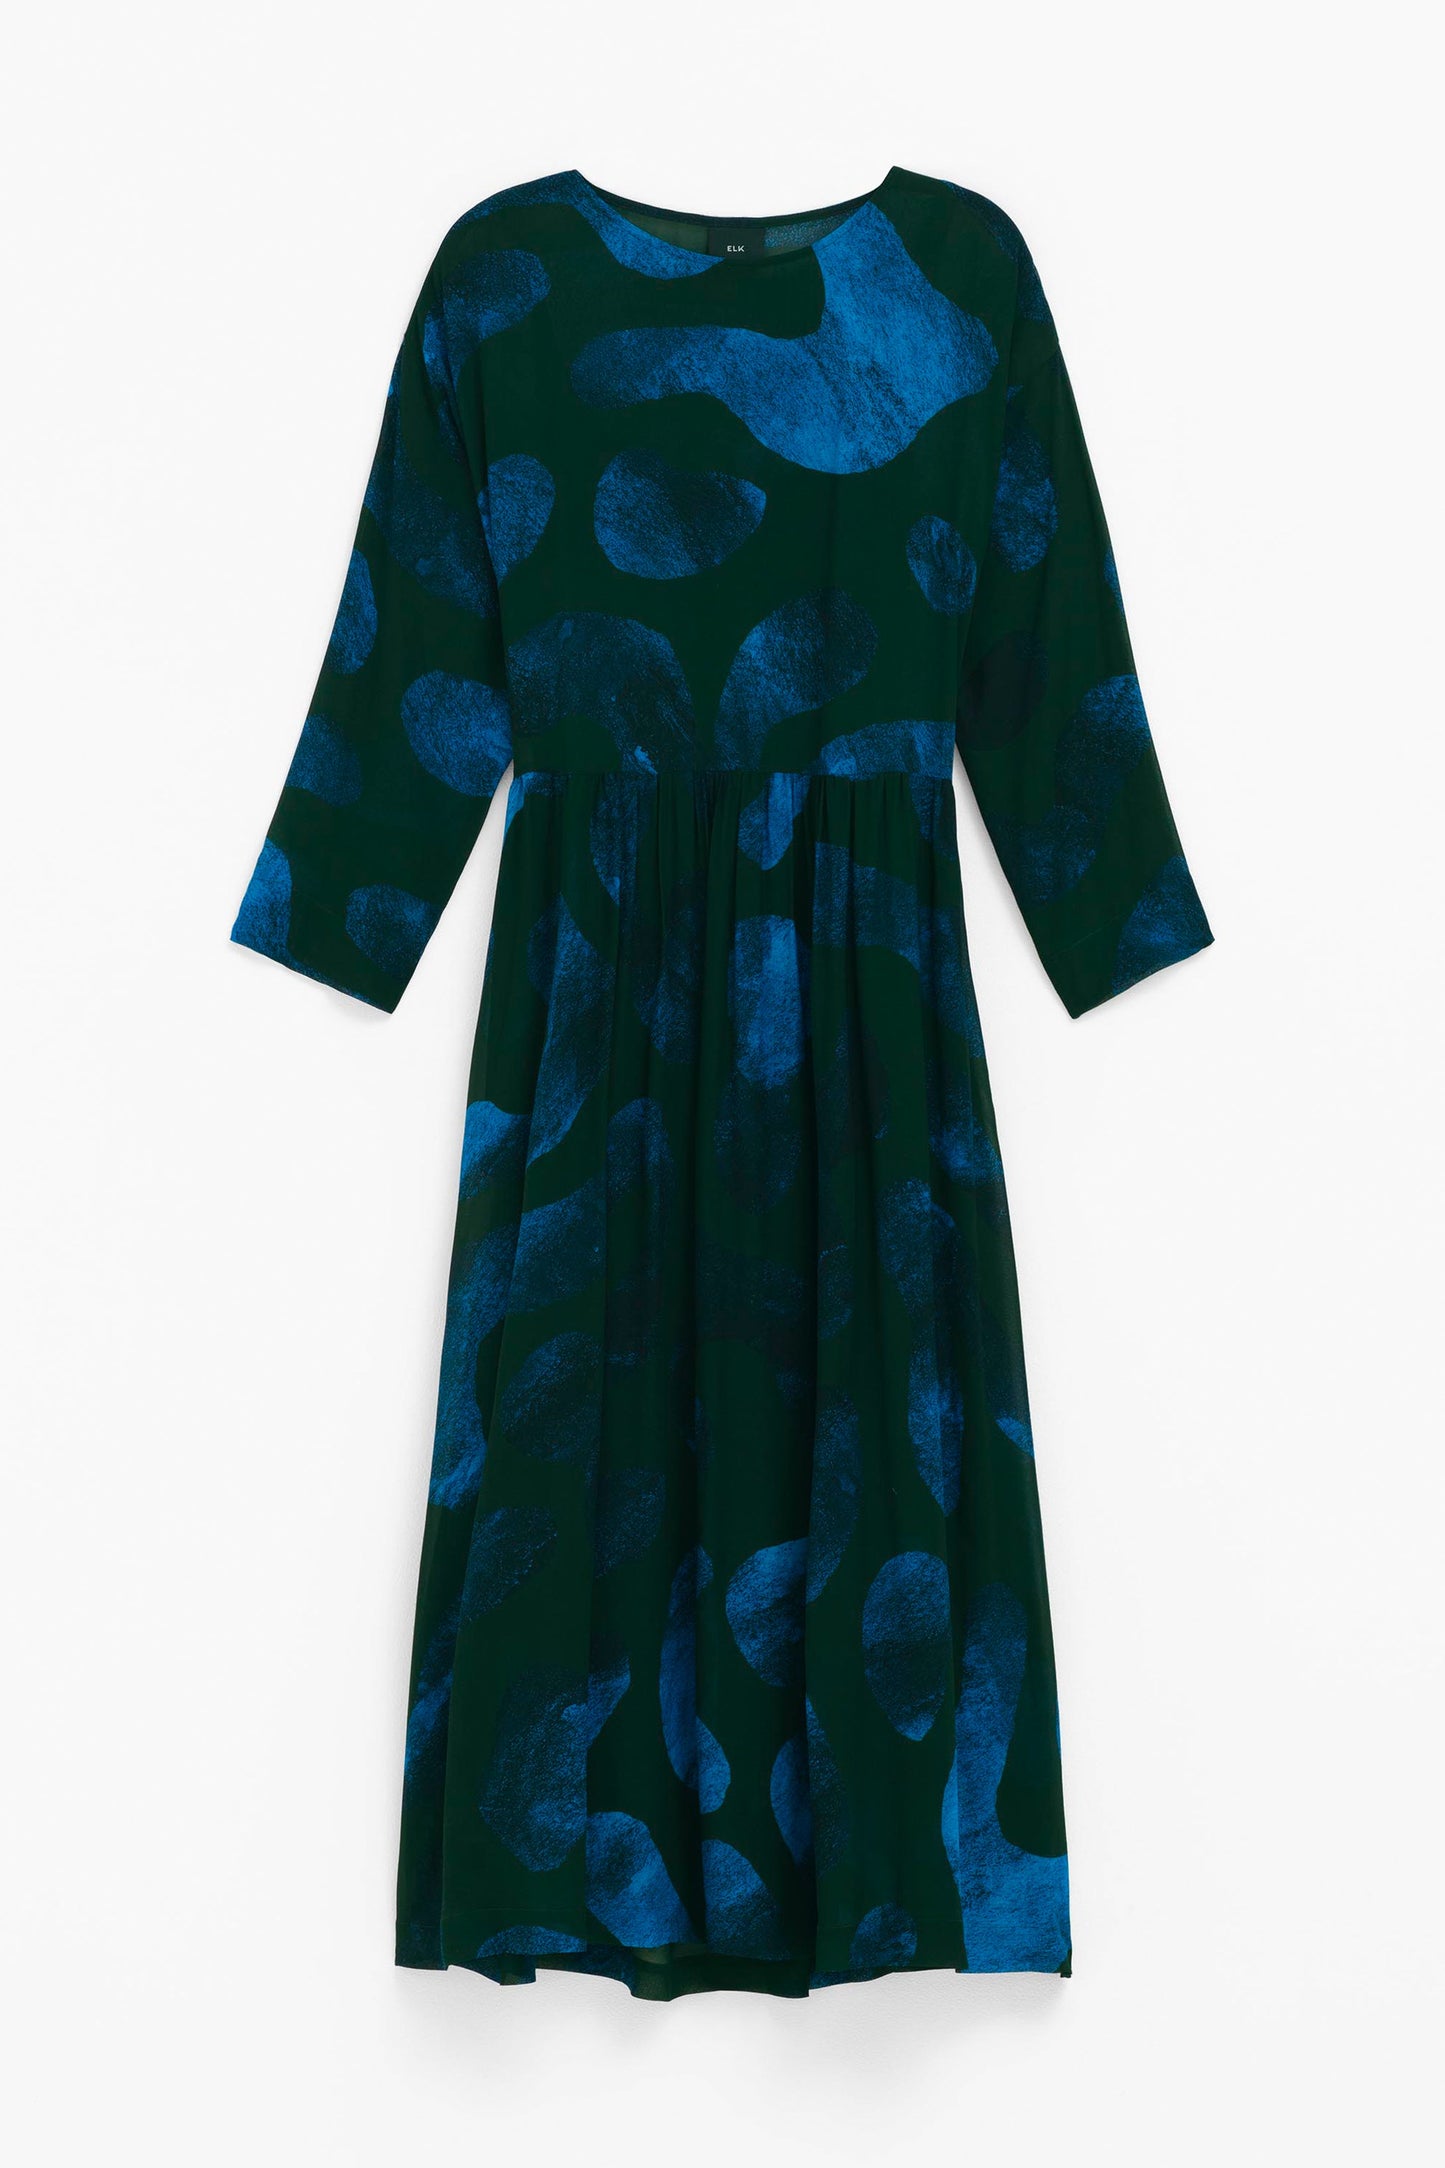 Gira Sheer Long Sleeve Black and Blue Print Dress with Slip Front | ANIMAL PRINT